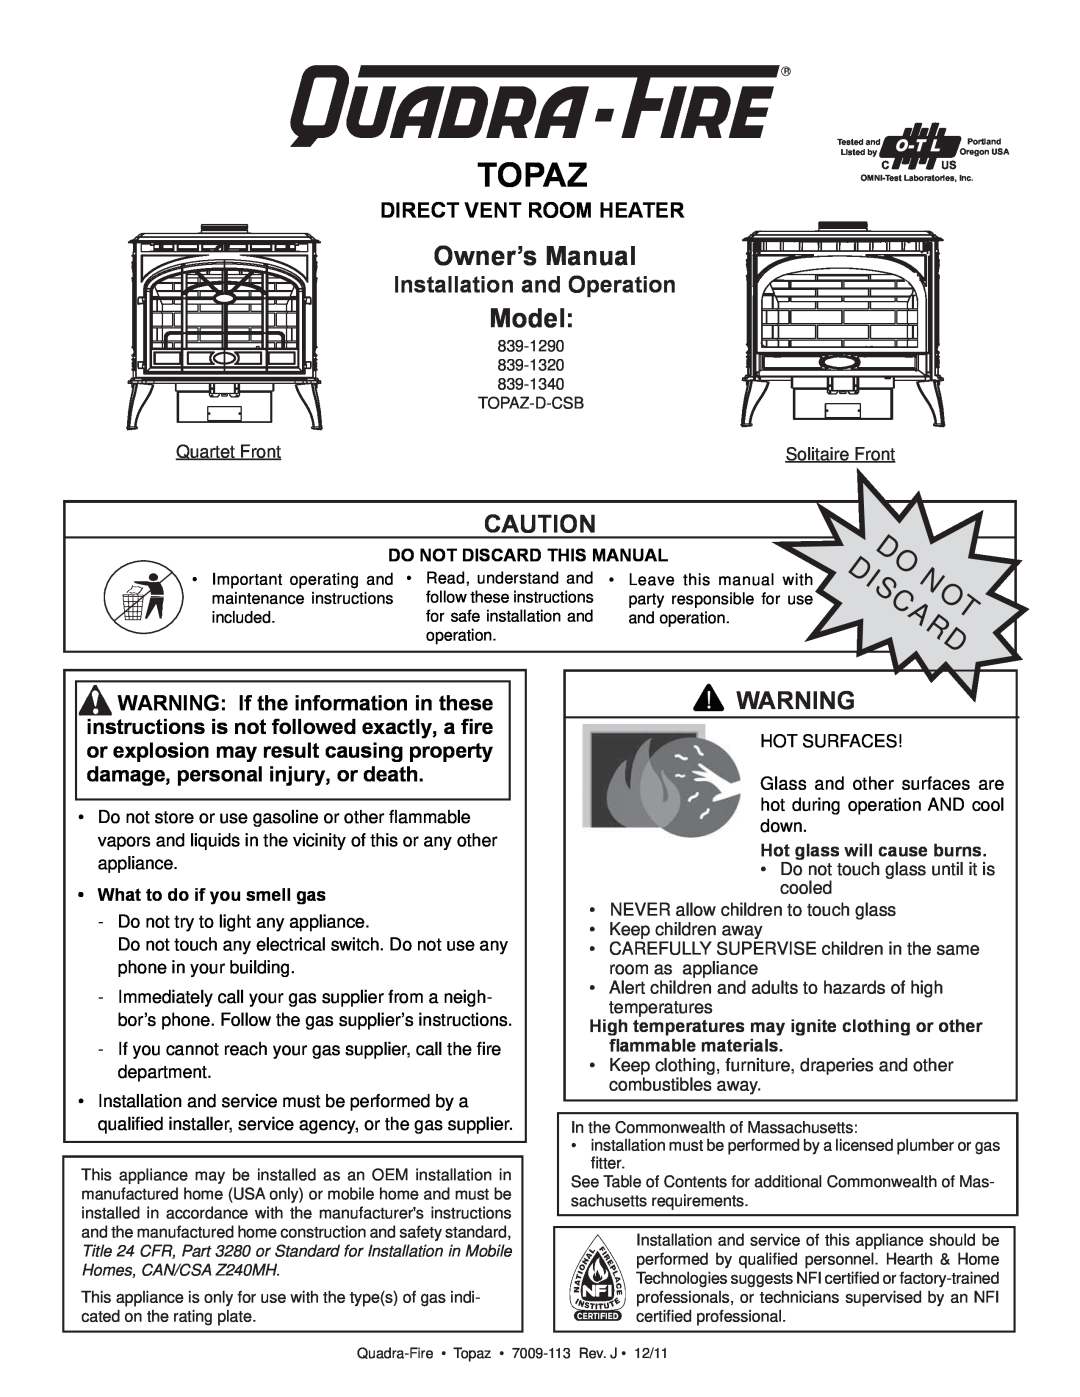 OmniTek 839-1320, 839-1290 owner manual Installation and Operation, Direct Vent Room Heater, Topaz, Model, Do Discardnot 